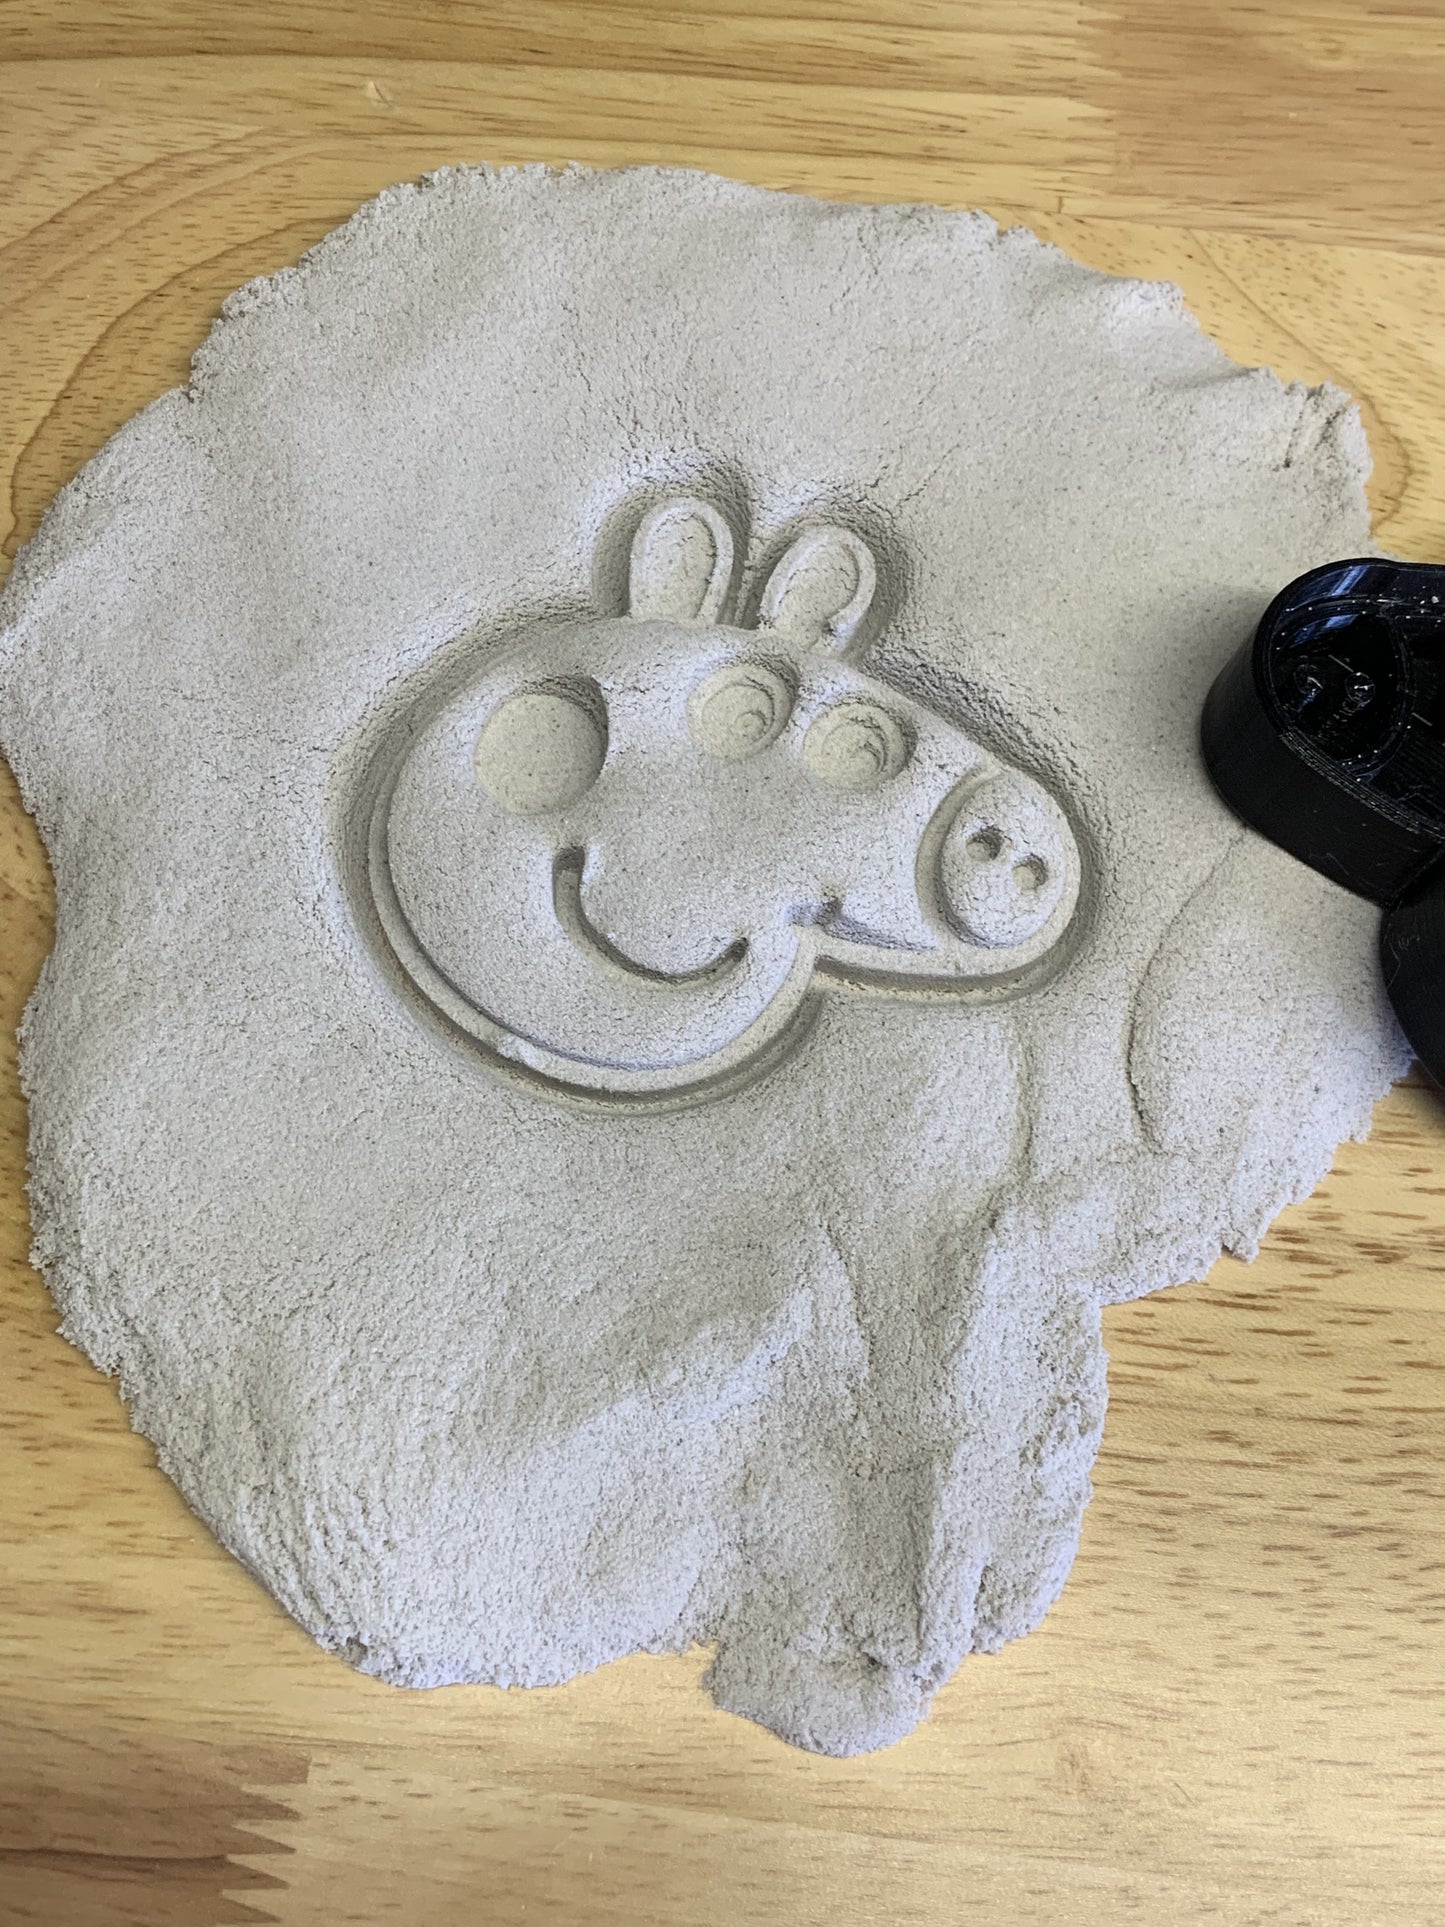 Peppa Pig Inspired Cookie Cutter | Senac LLC | polymer clay dough cutter clay shape jewelry cutters